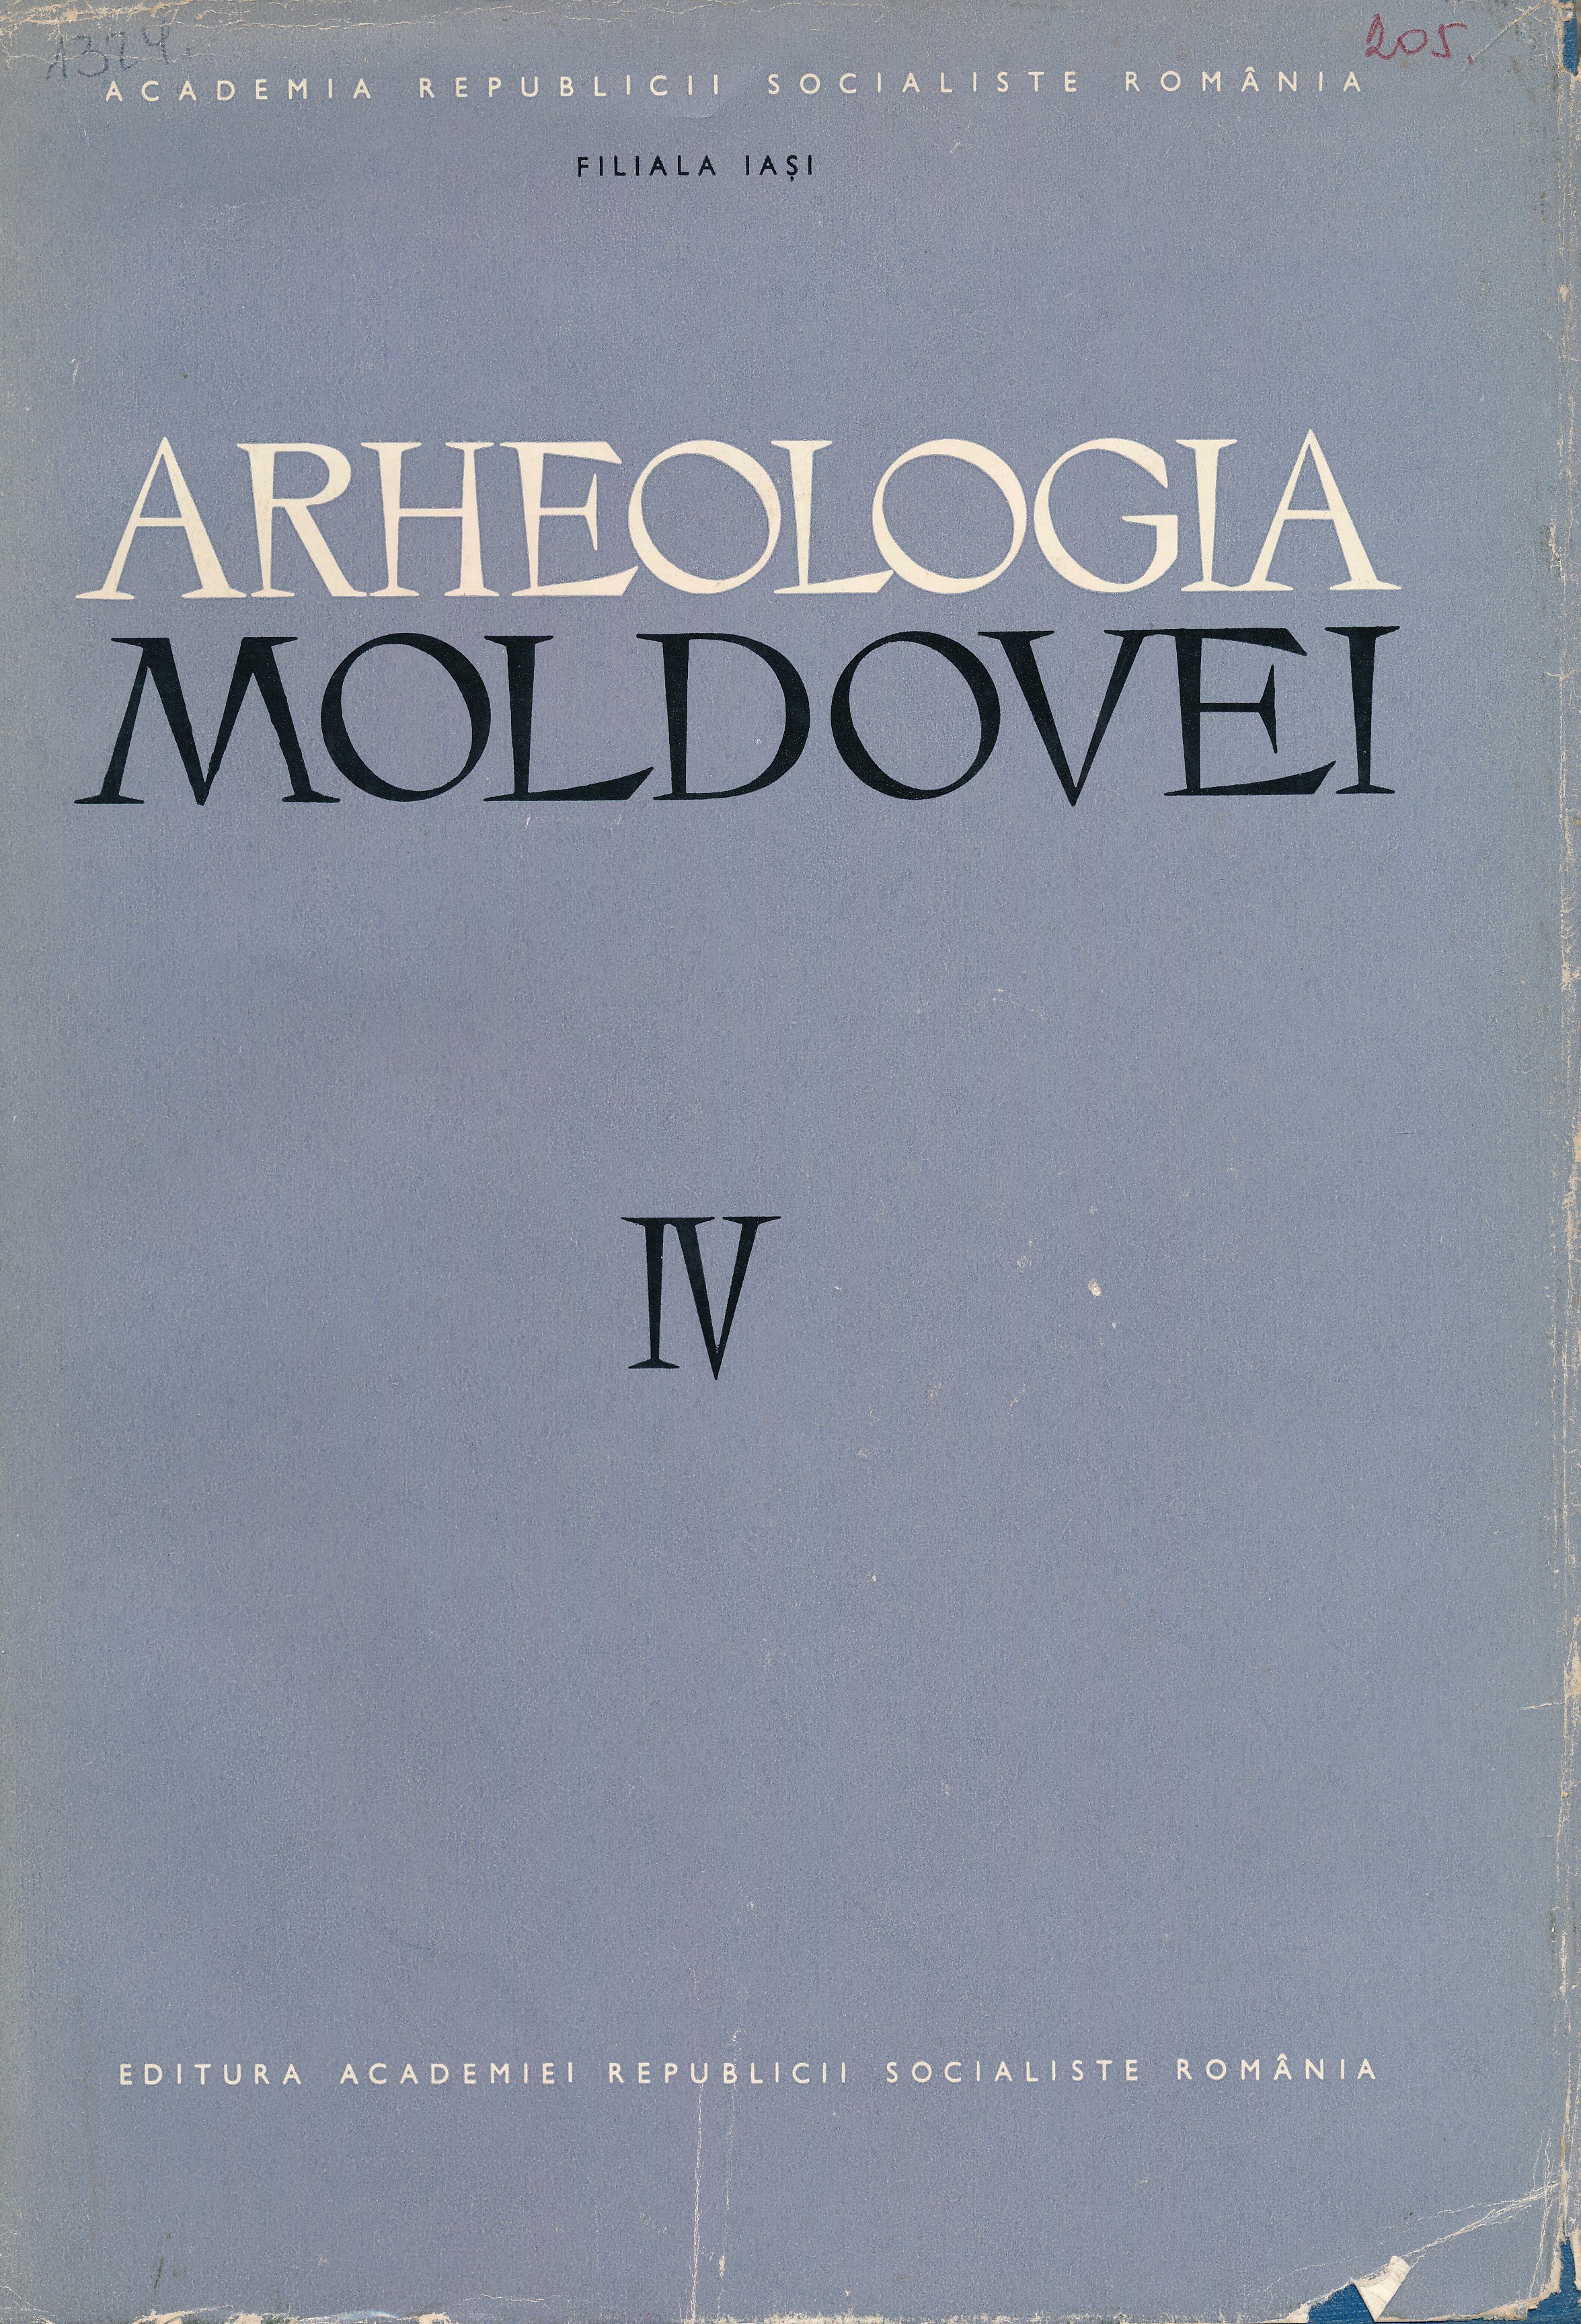 Arheologia Moldevei IV. (Erkel Ferenc Területi Múzeum, Gyula CC BY-NC-SA)